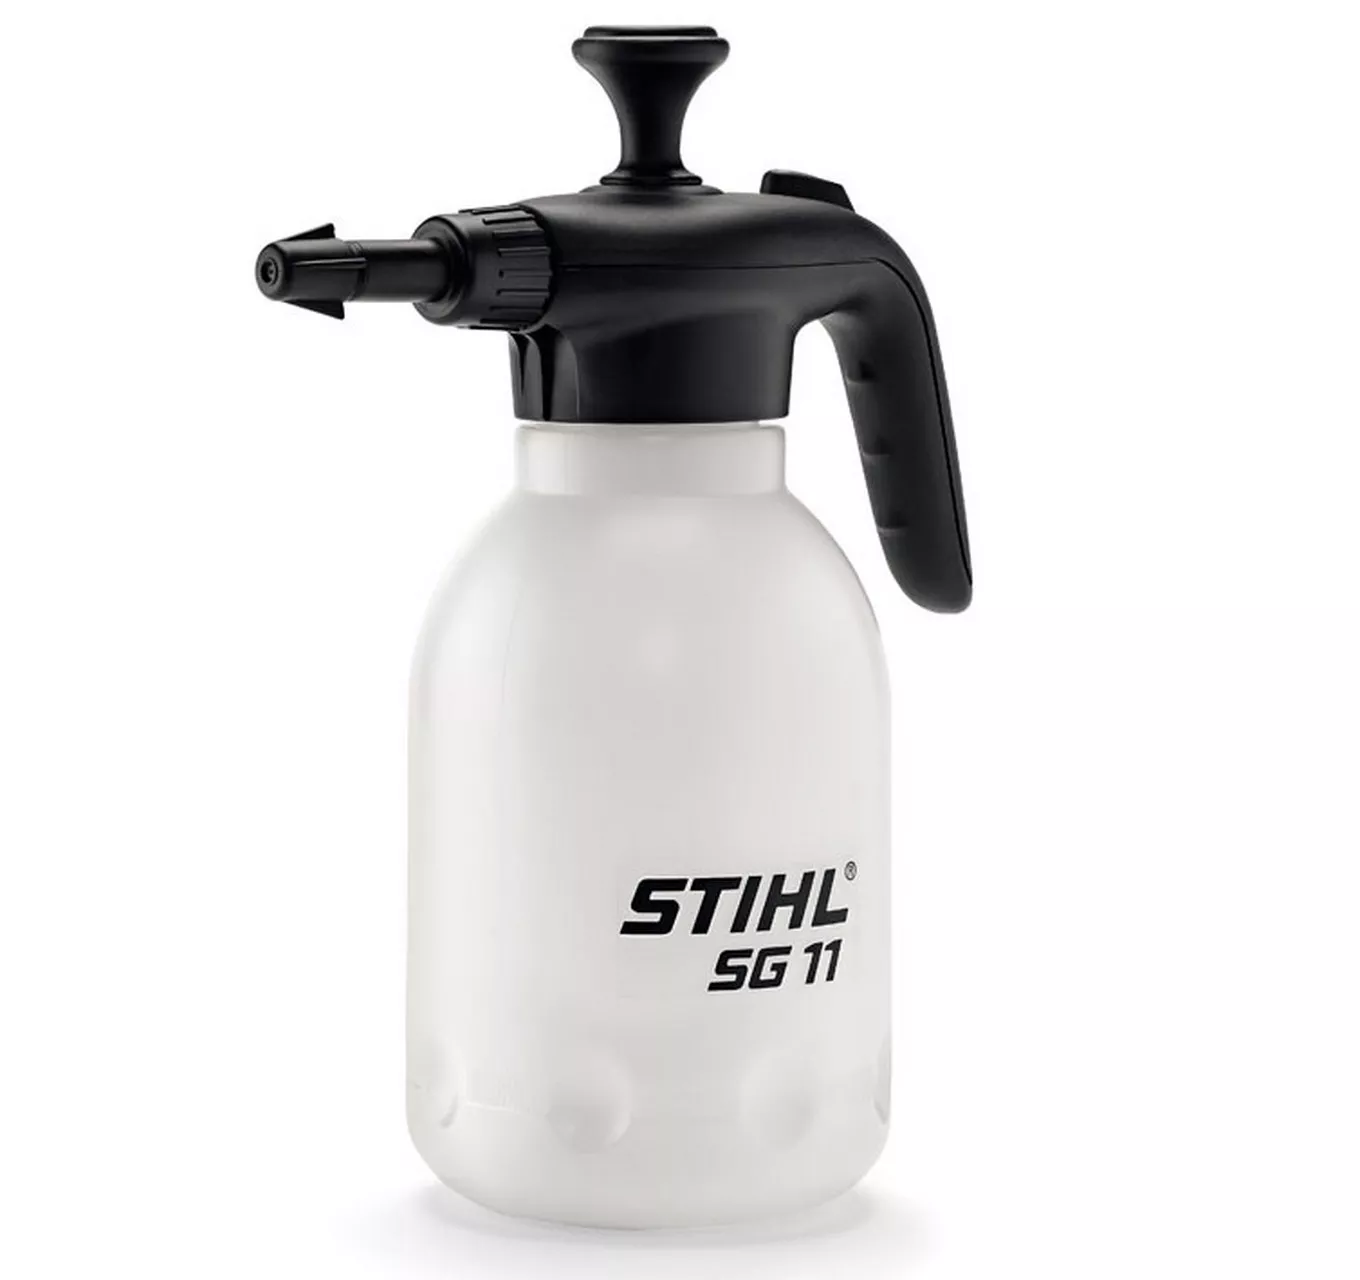 SG 11 Hand Sprayer 1.5L